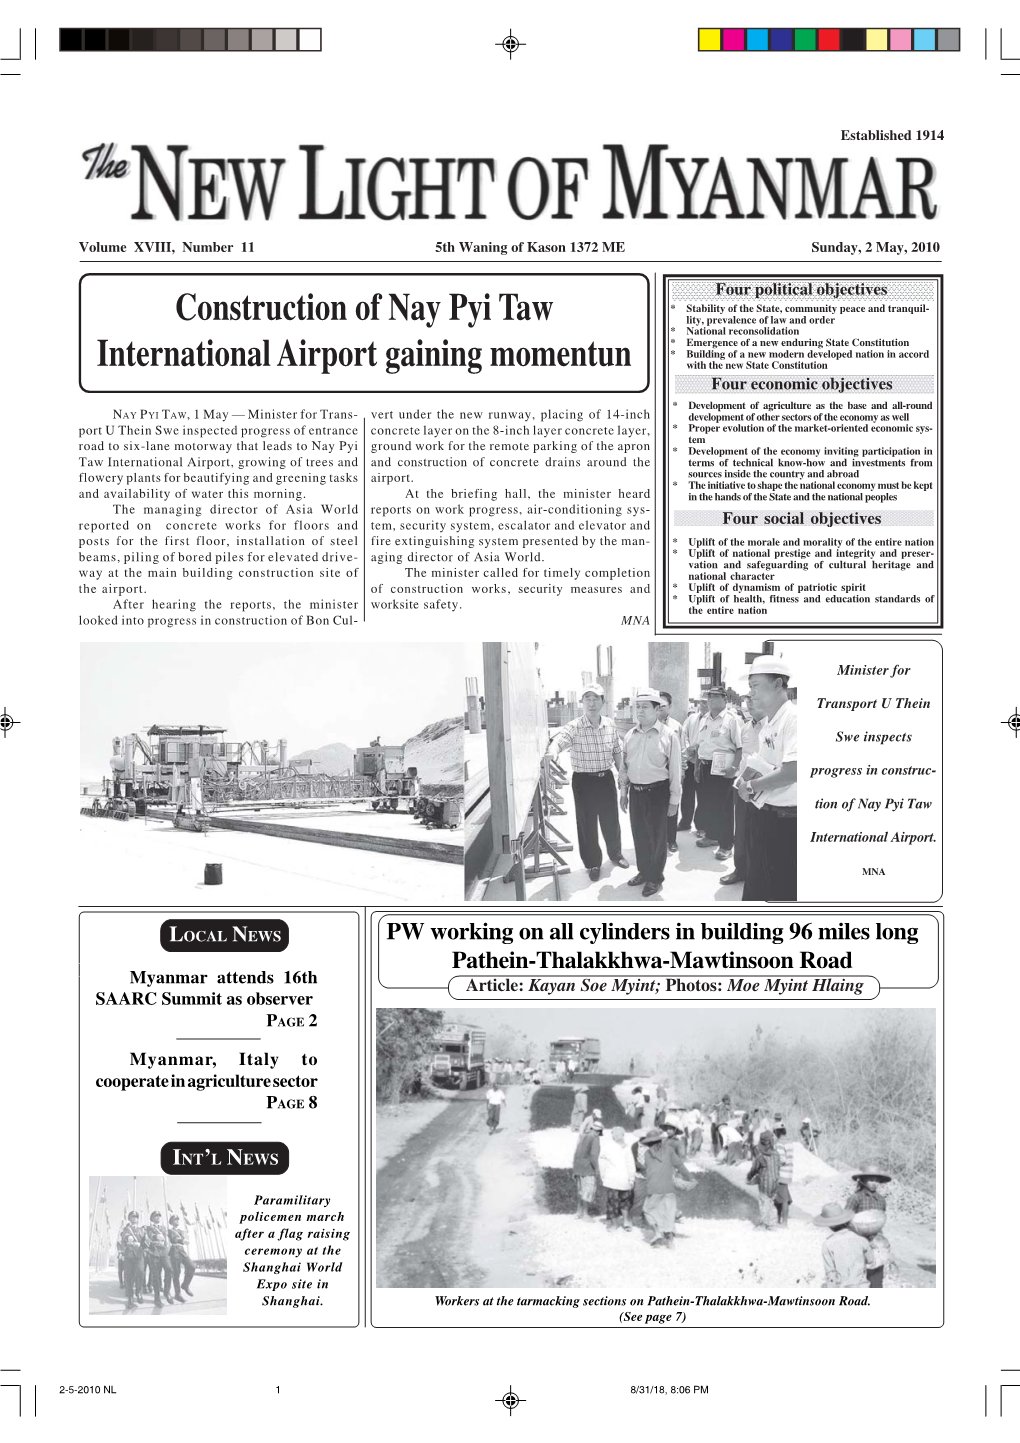 Construction of Nay Pyi Taw International Airport Gaining Momentun